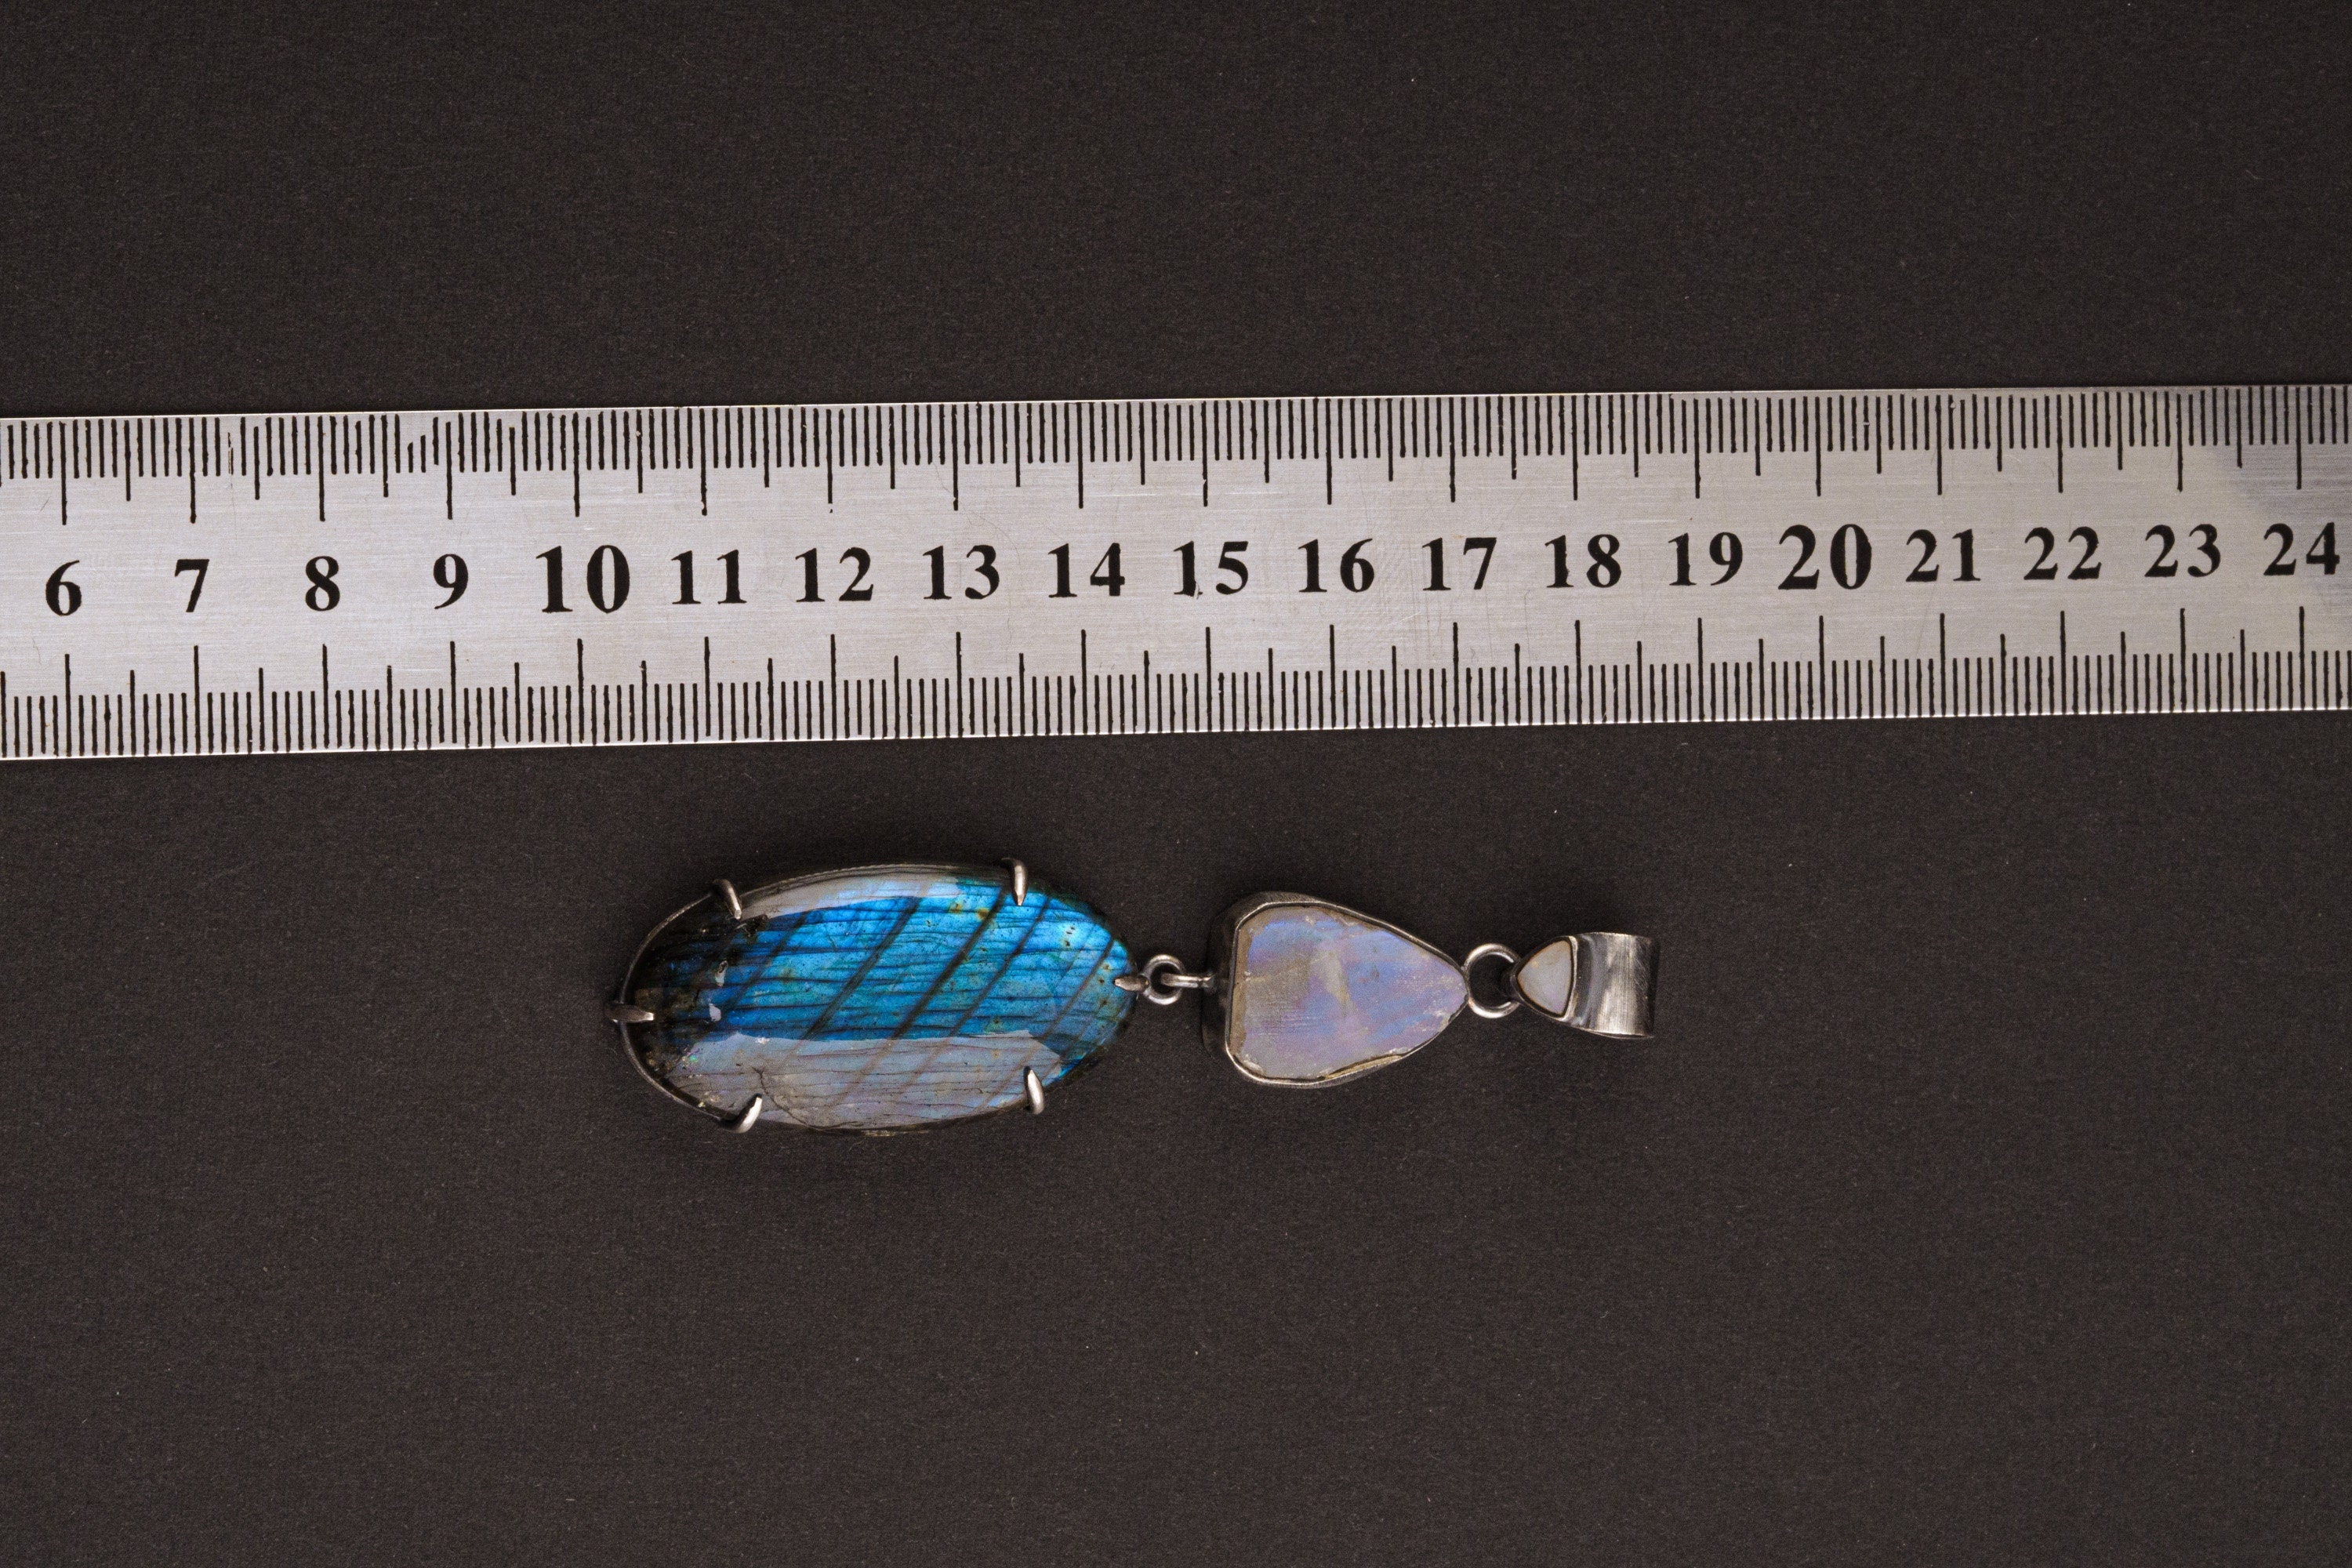 Celestial Alignment: Ethiopian Opal, Blue Moonstone, and Labradorite - Sterling Silver Pendant